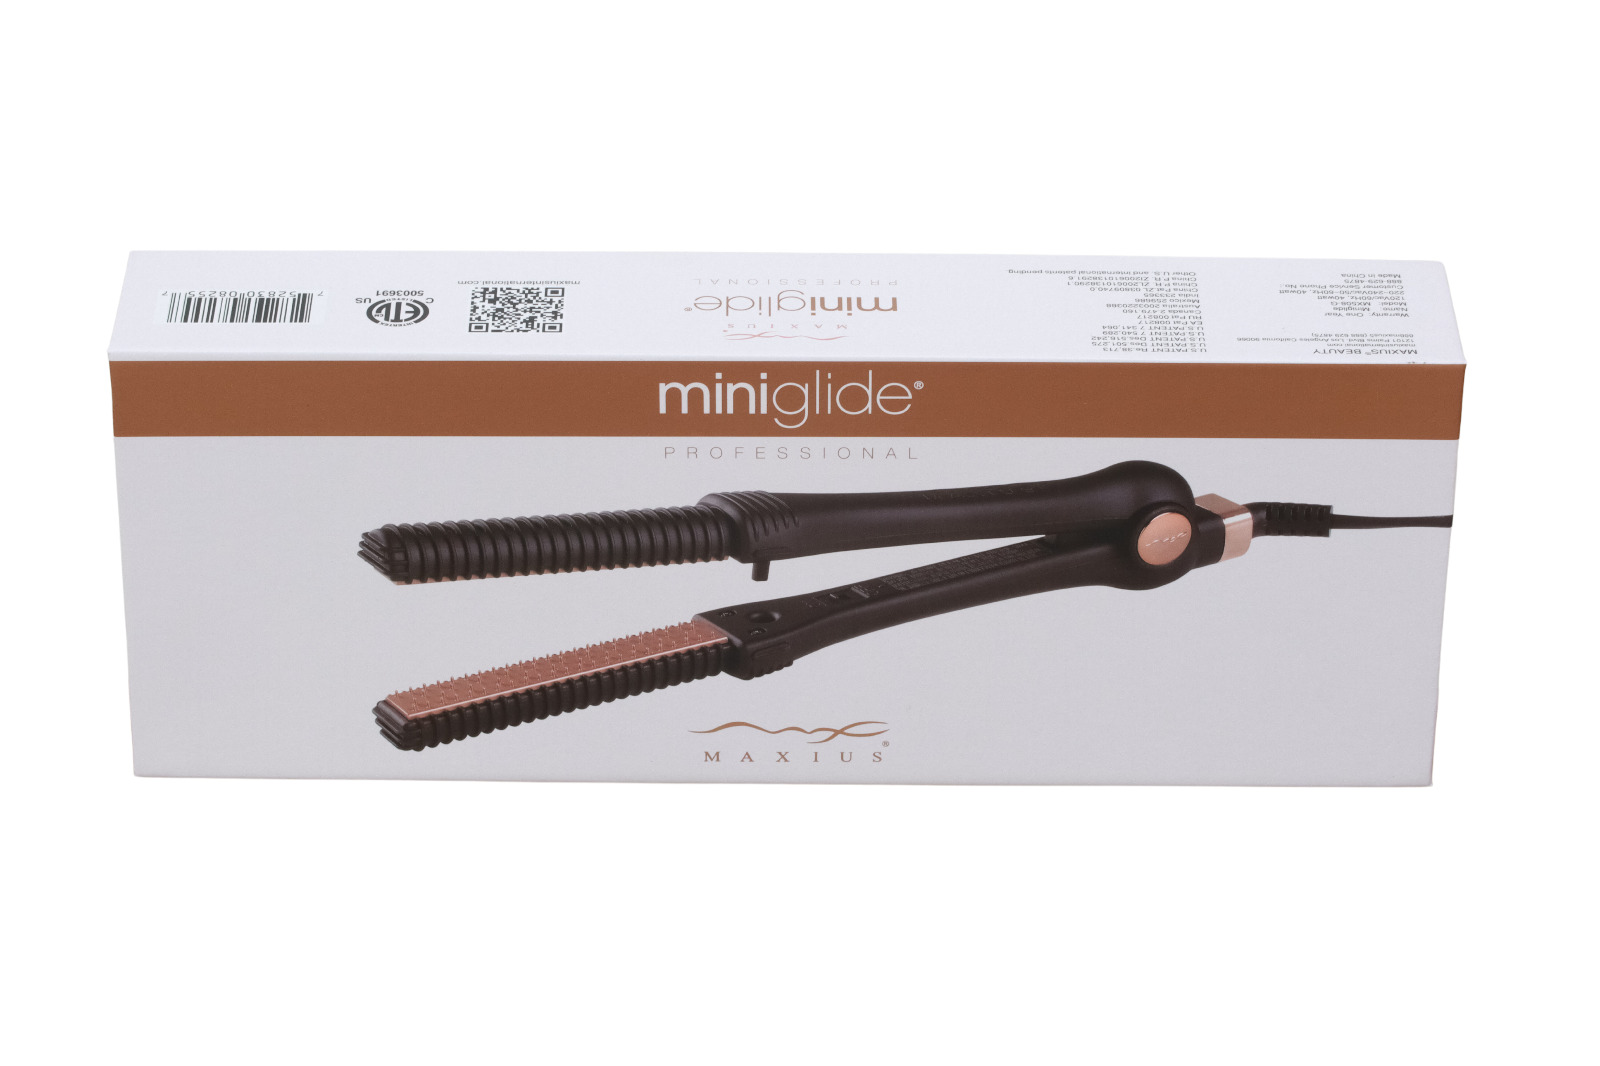 Maxius Miniglide Professional Hair Straightener Dual Voltage Travel Size